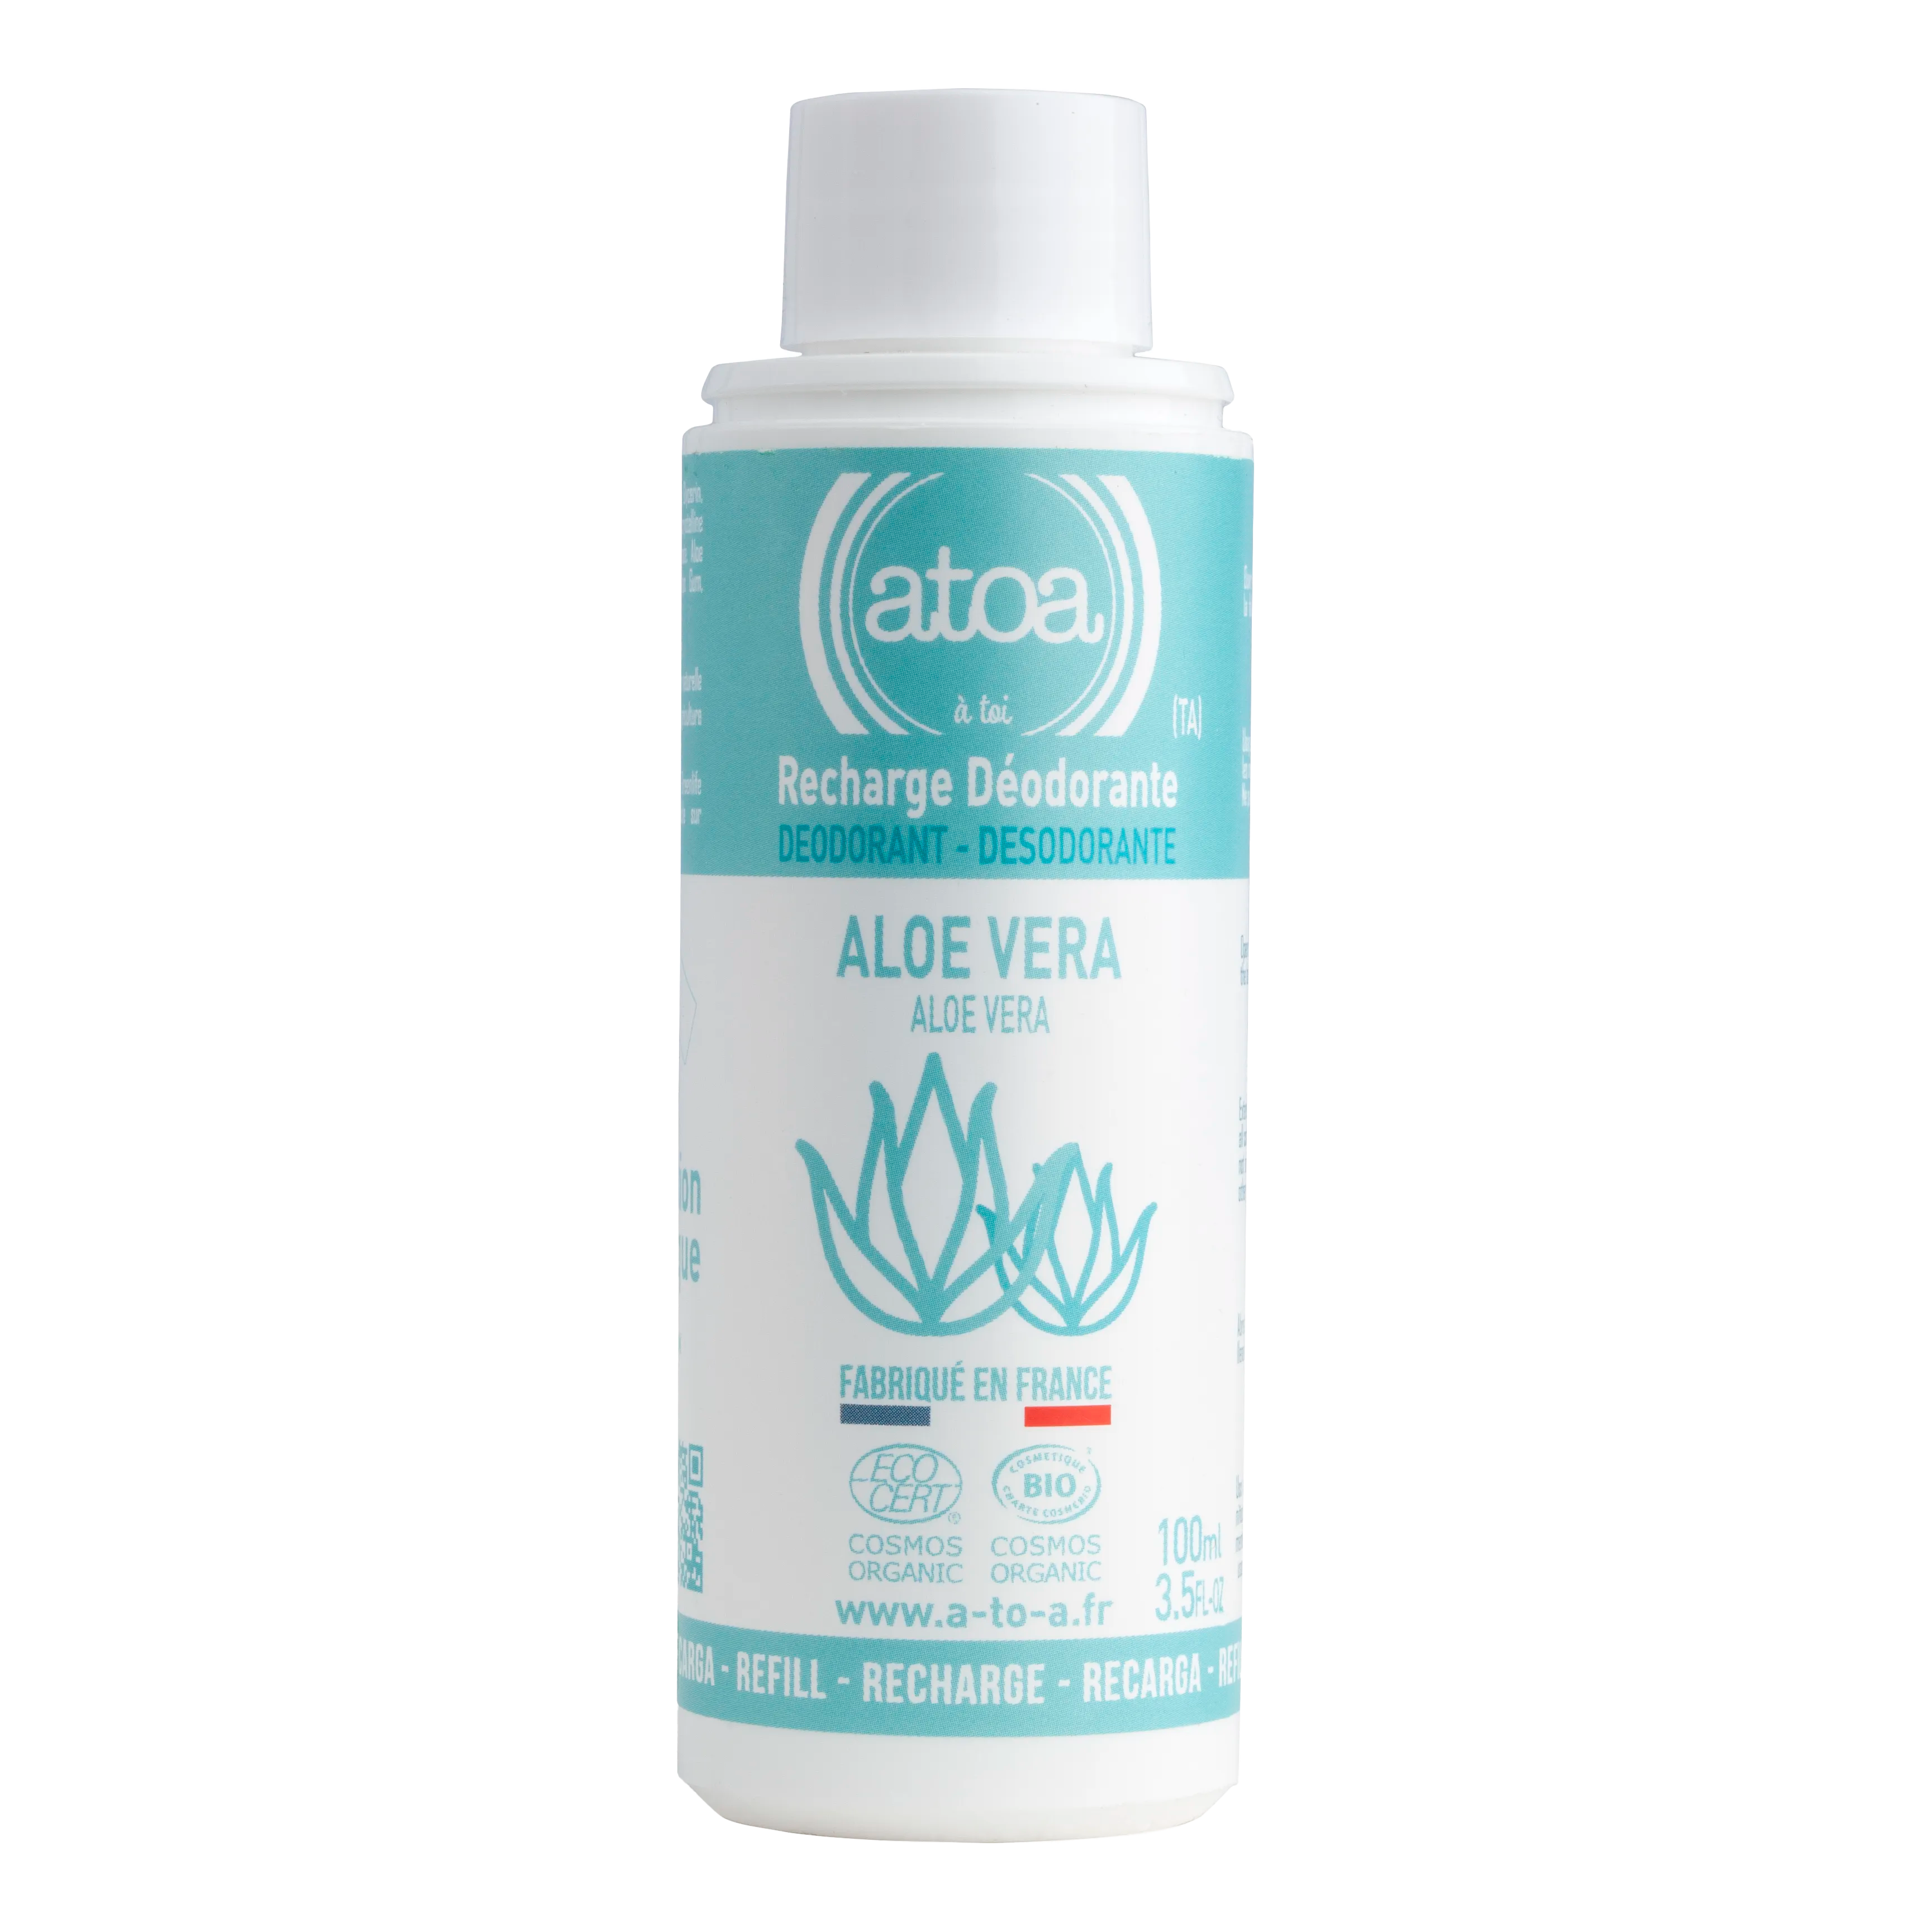 Atoa Roll-on Deodorant - Refill